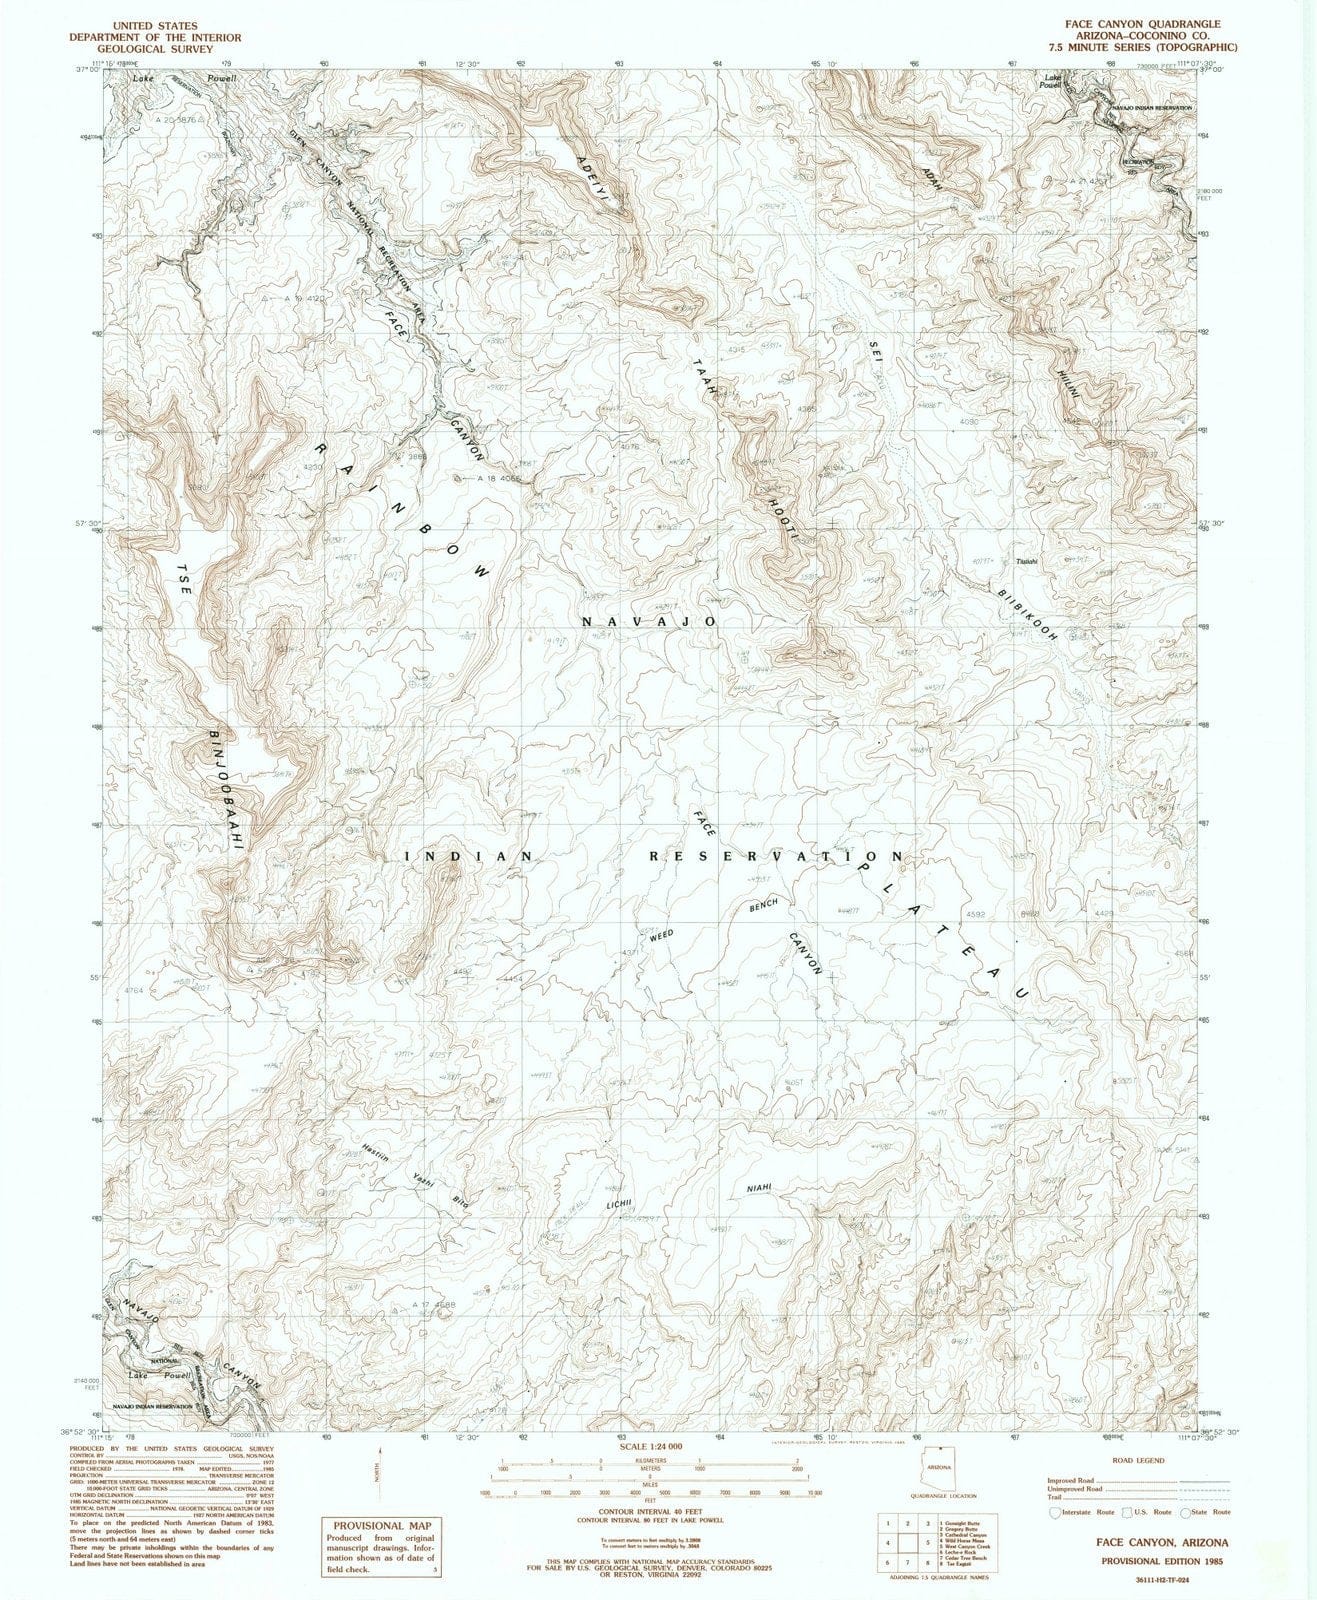 1985 Face Canyon, AZ - Arizona - USGS Topographic Map